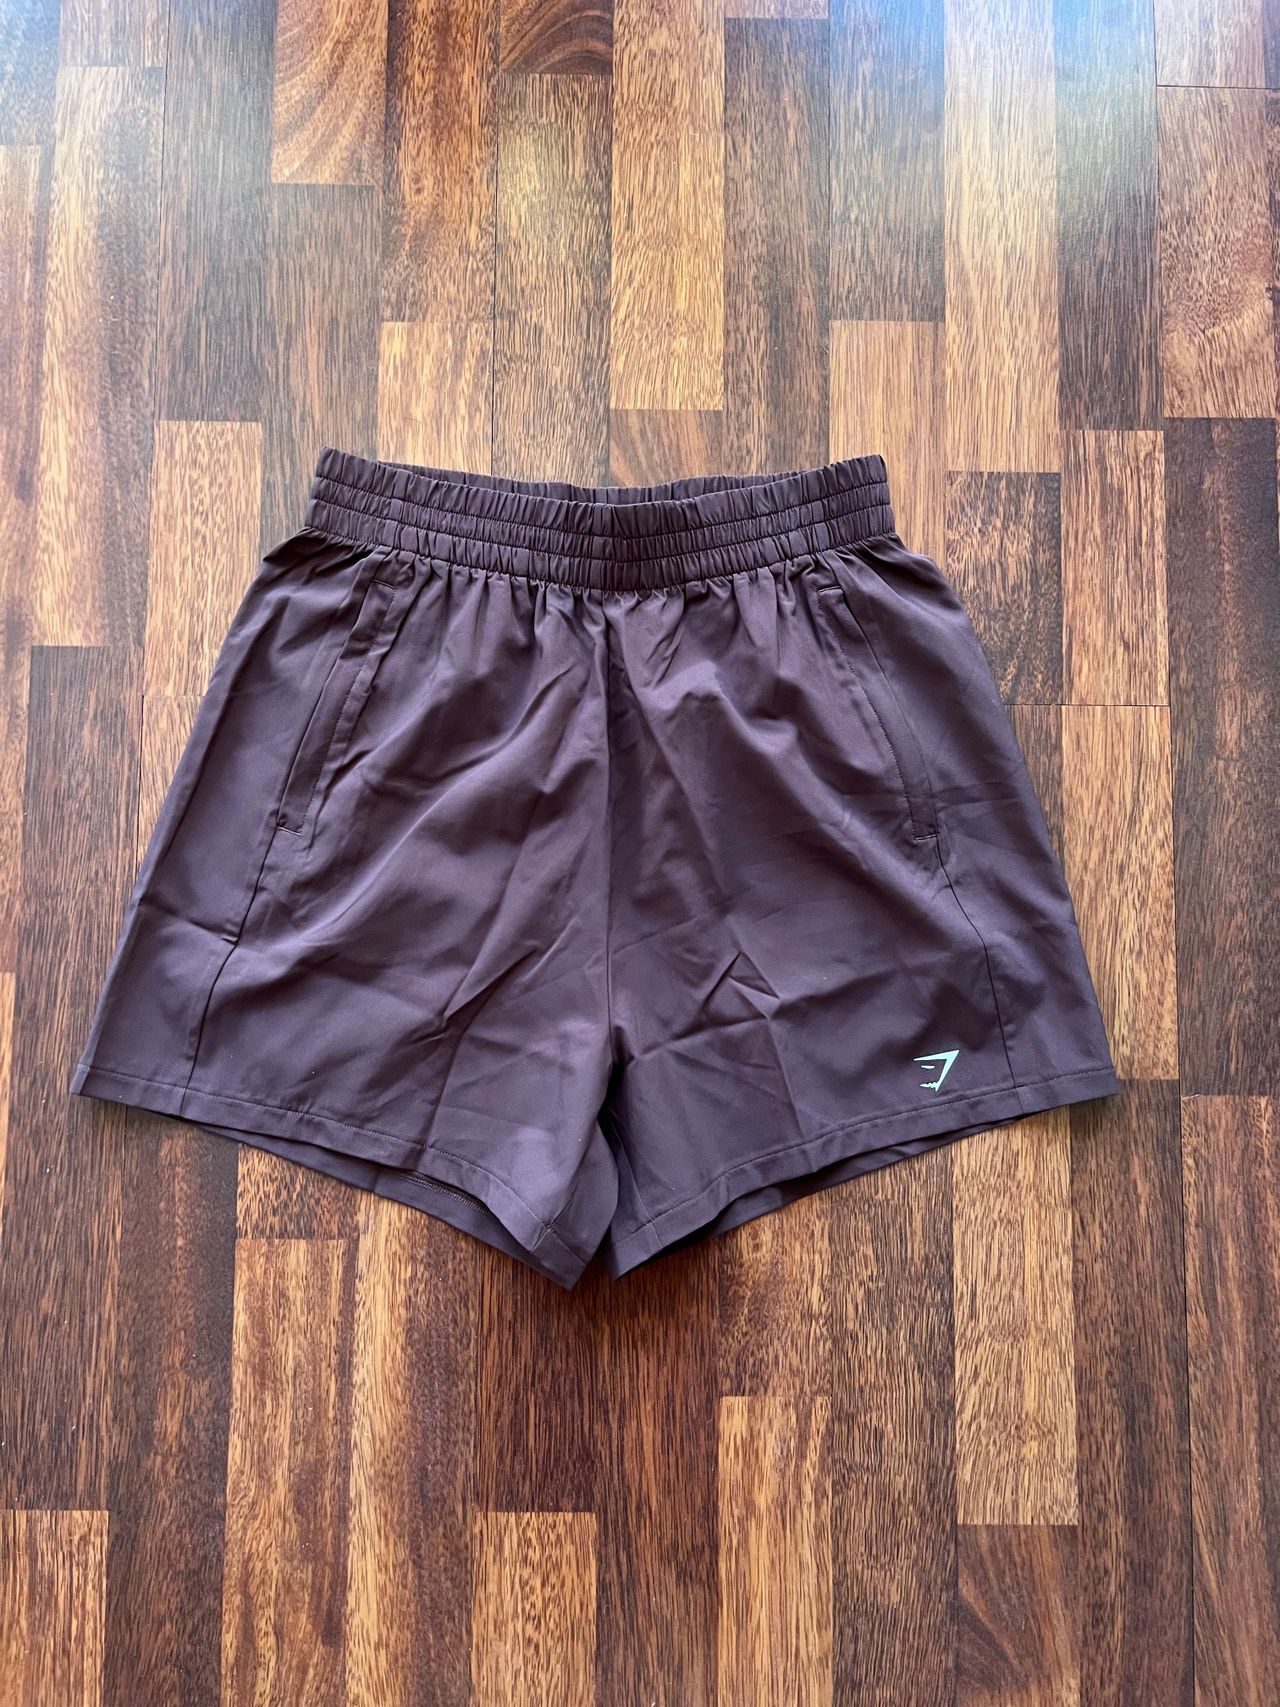 Gymshark Woven Pocket Shorts - Chocolate Brown